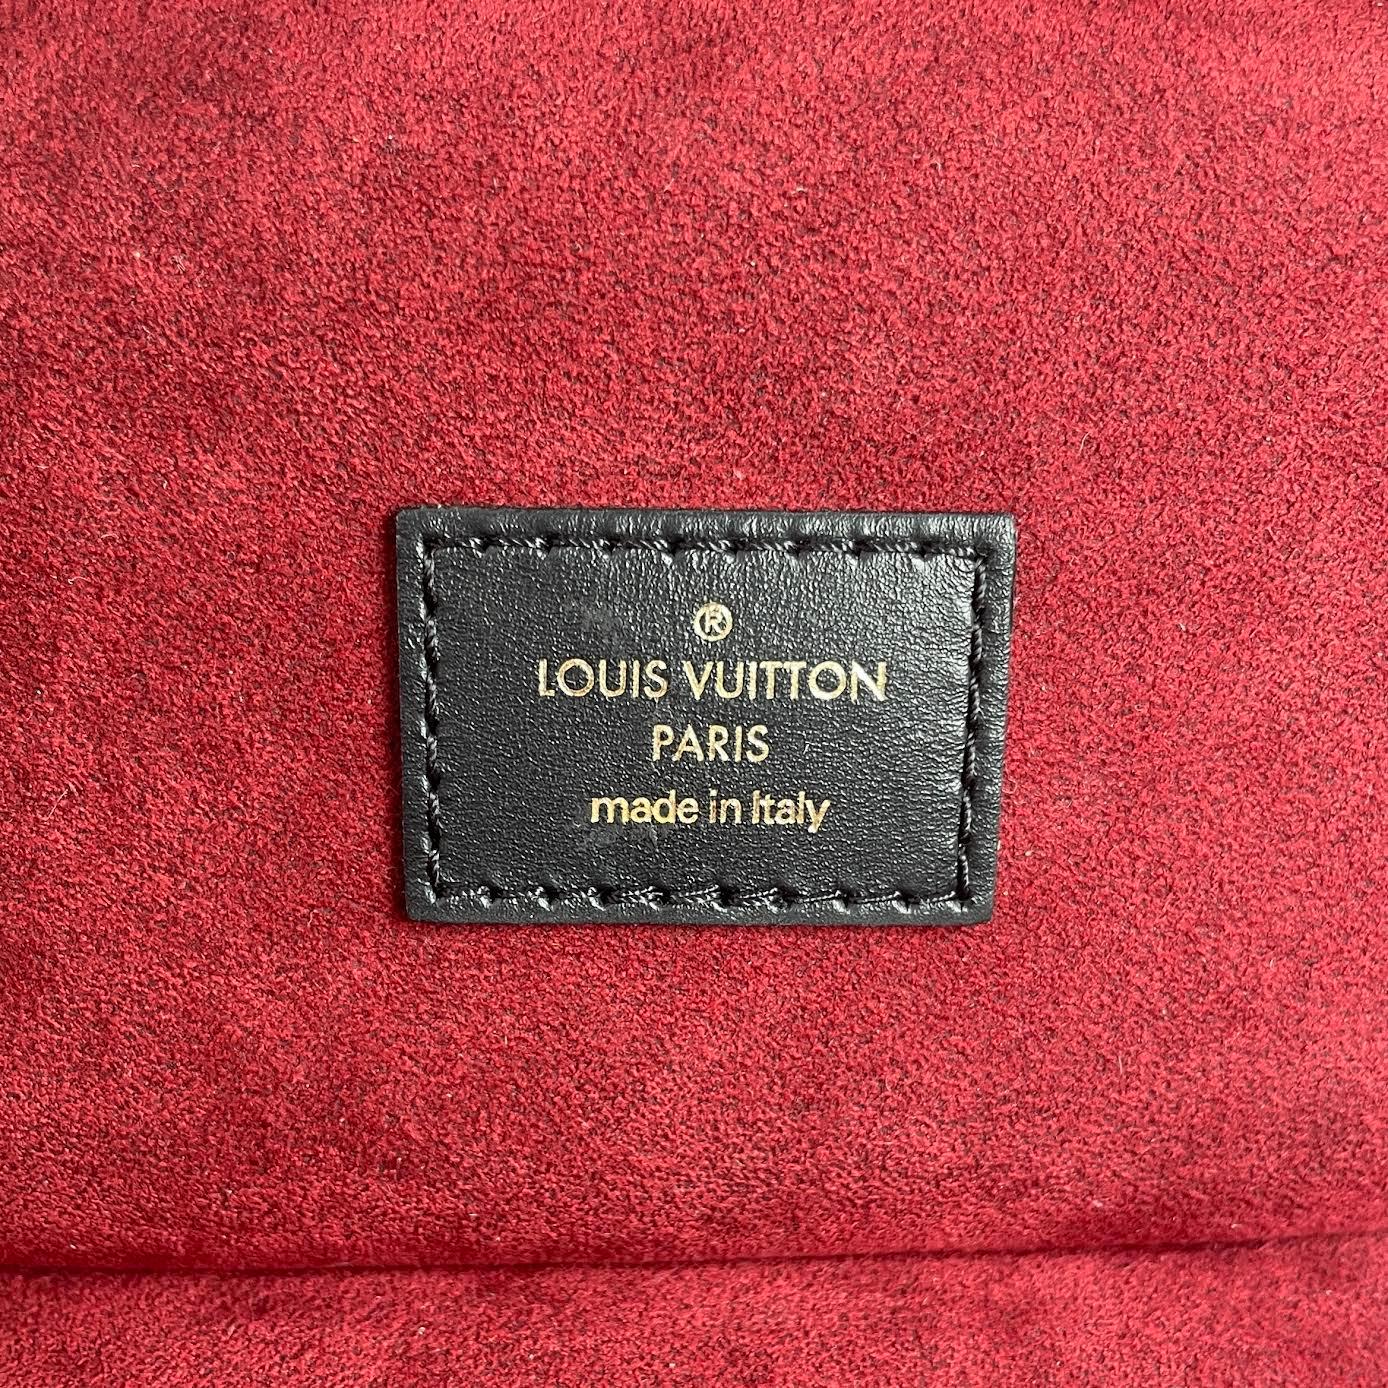 Sold at Auction: Louis Vuitton Vanity PM Black/Beige Empreinte Leather